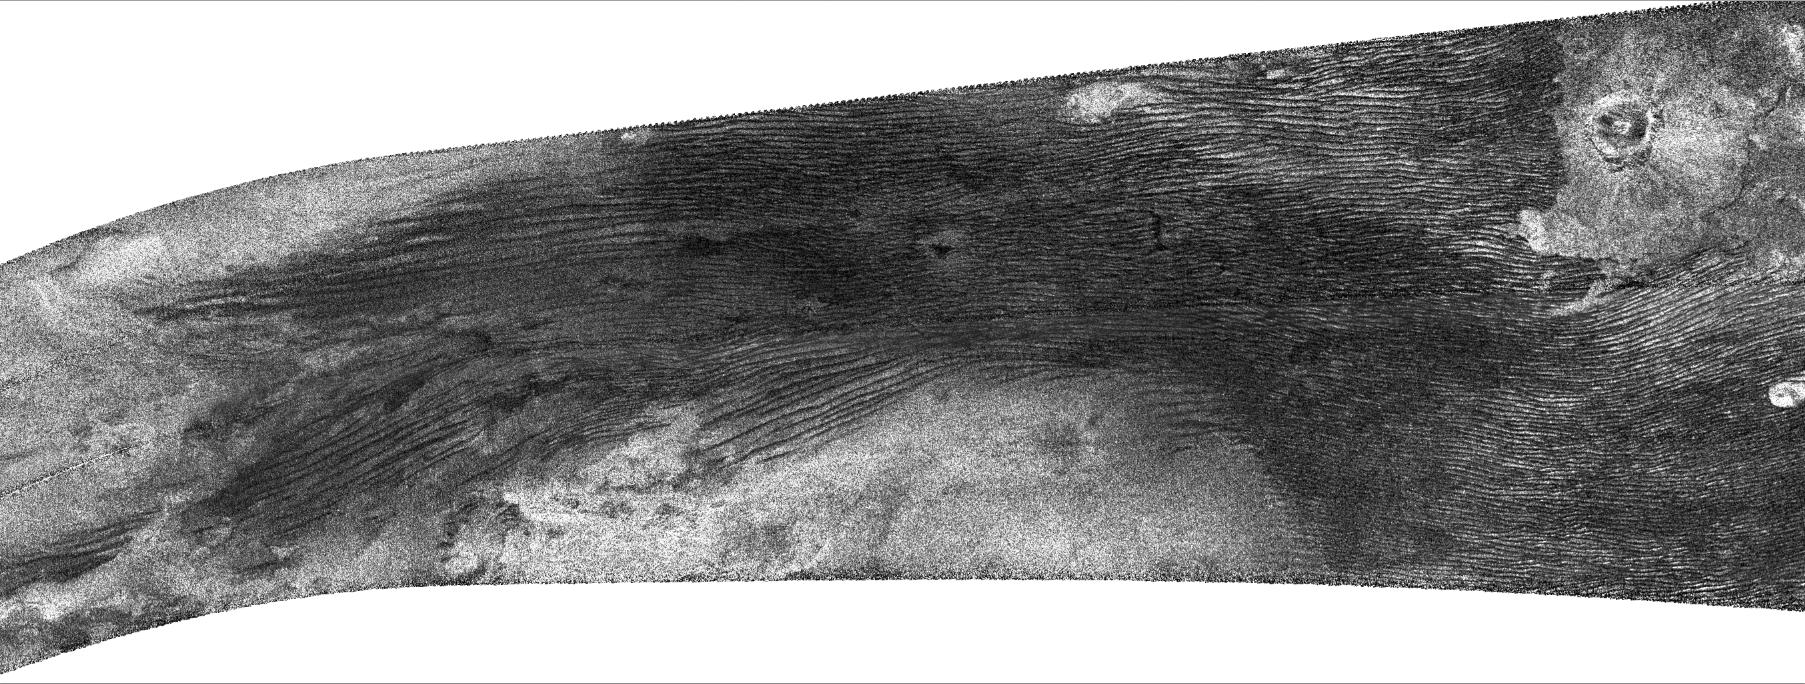 Radar image of Titan